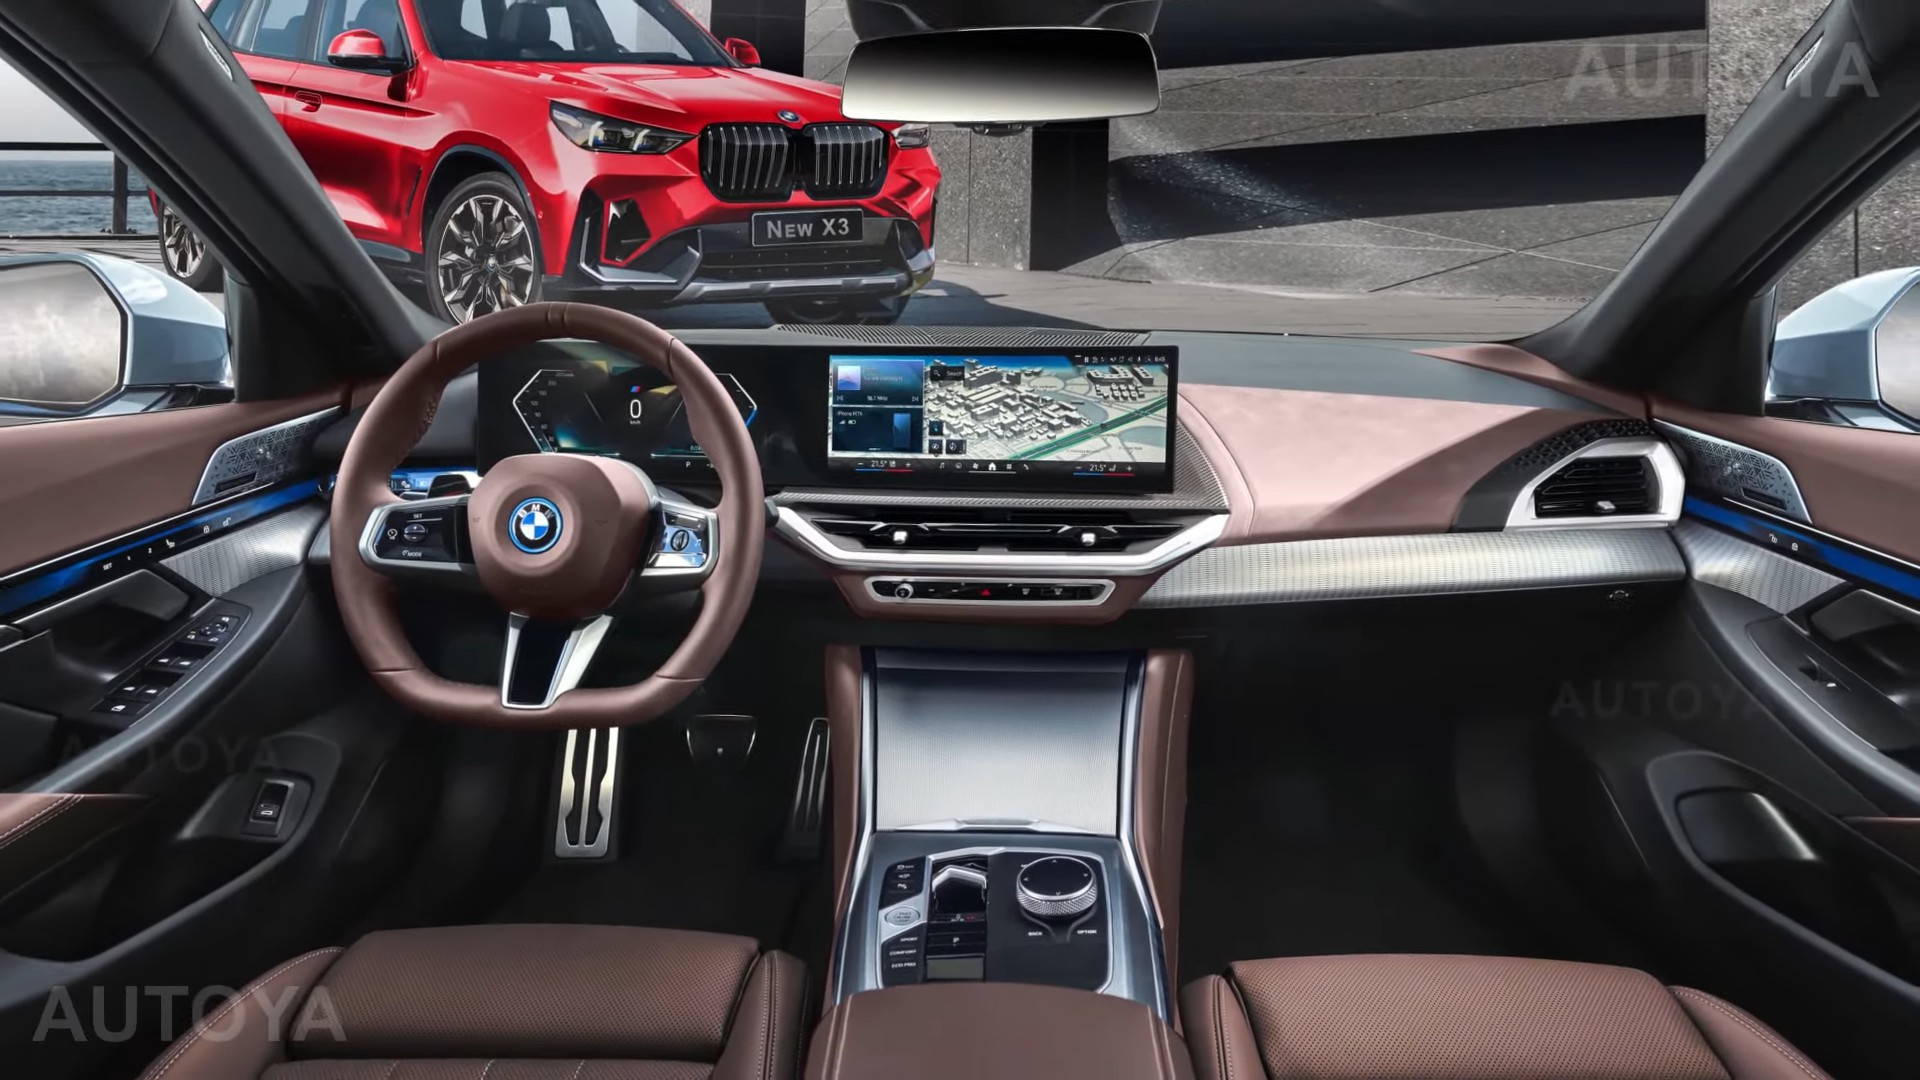 NextGen BMW X3 (G45) Gets Lots of Posh yet Unofficial Interior